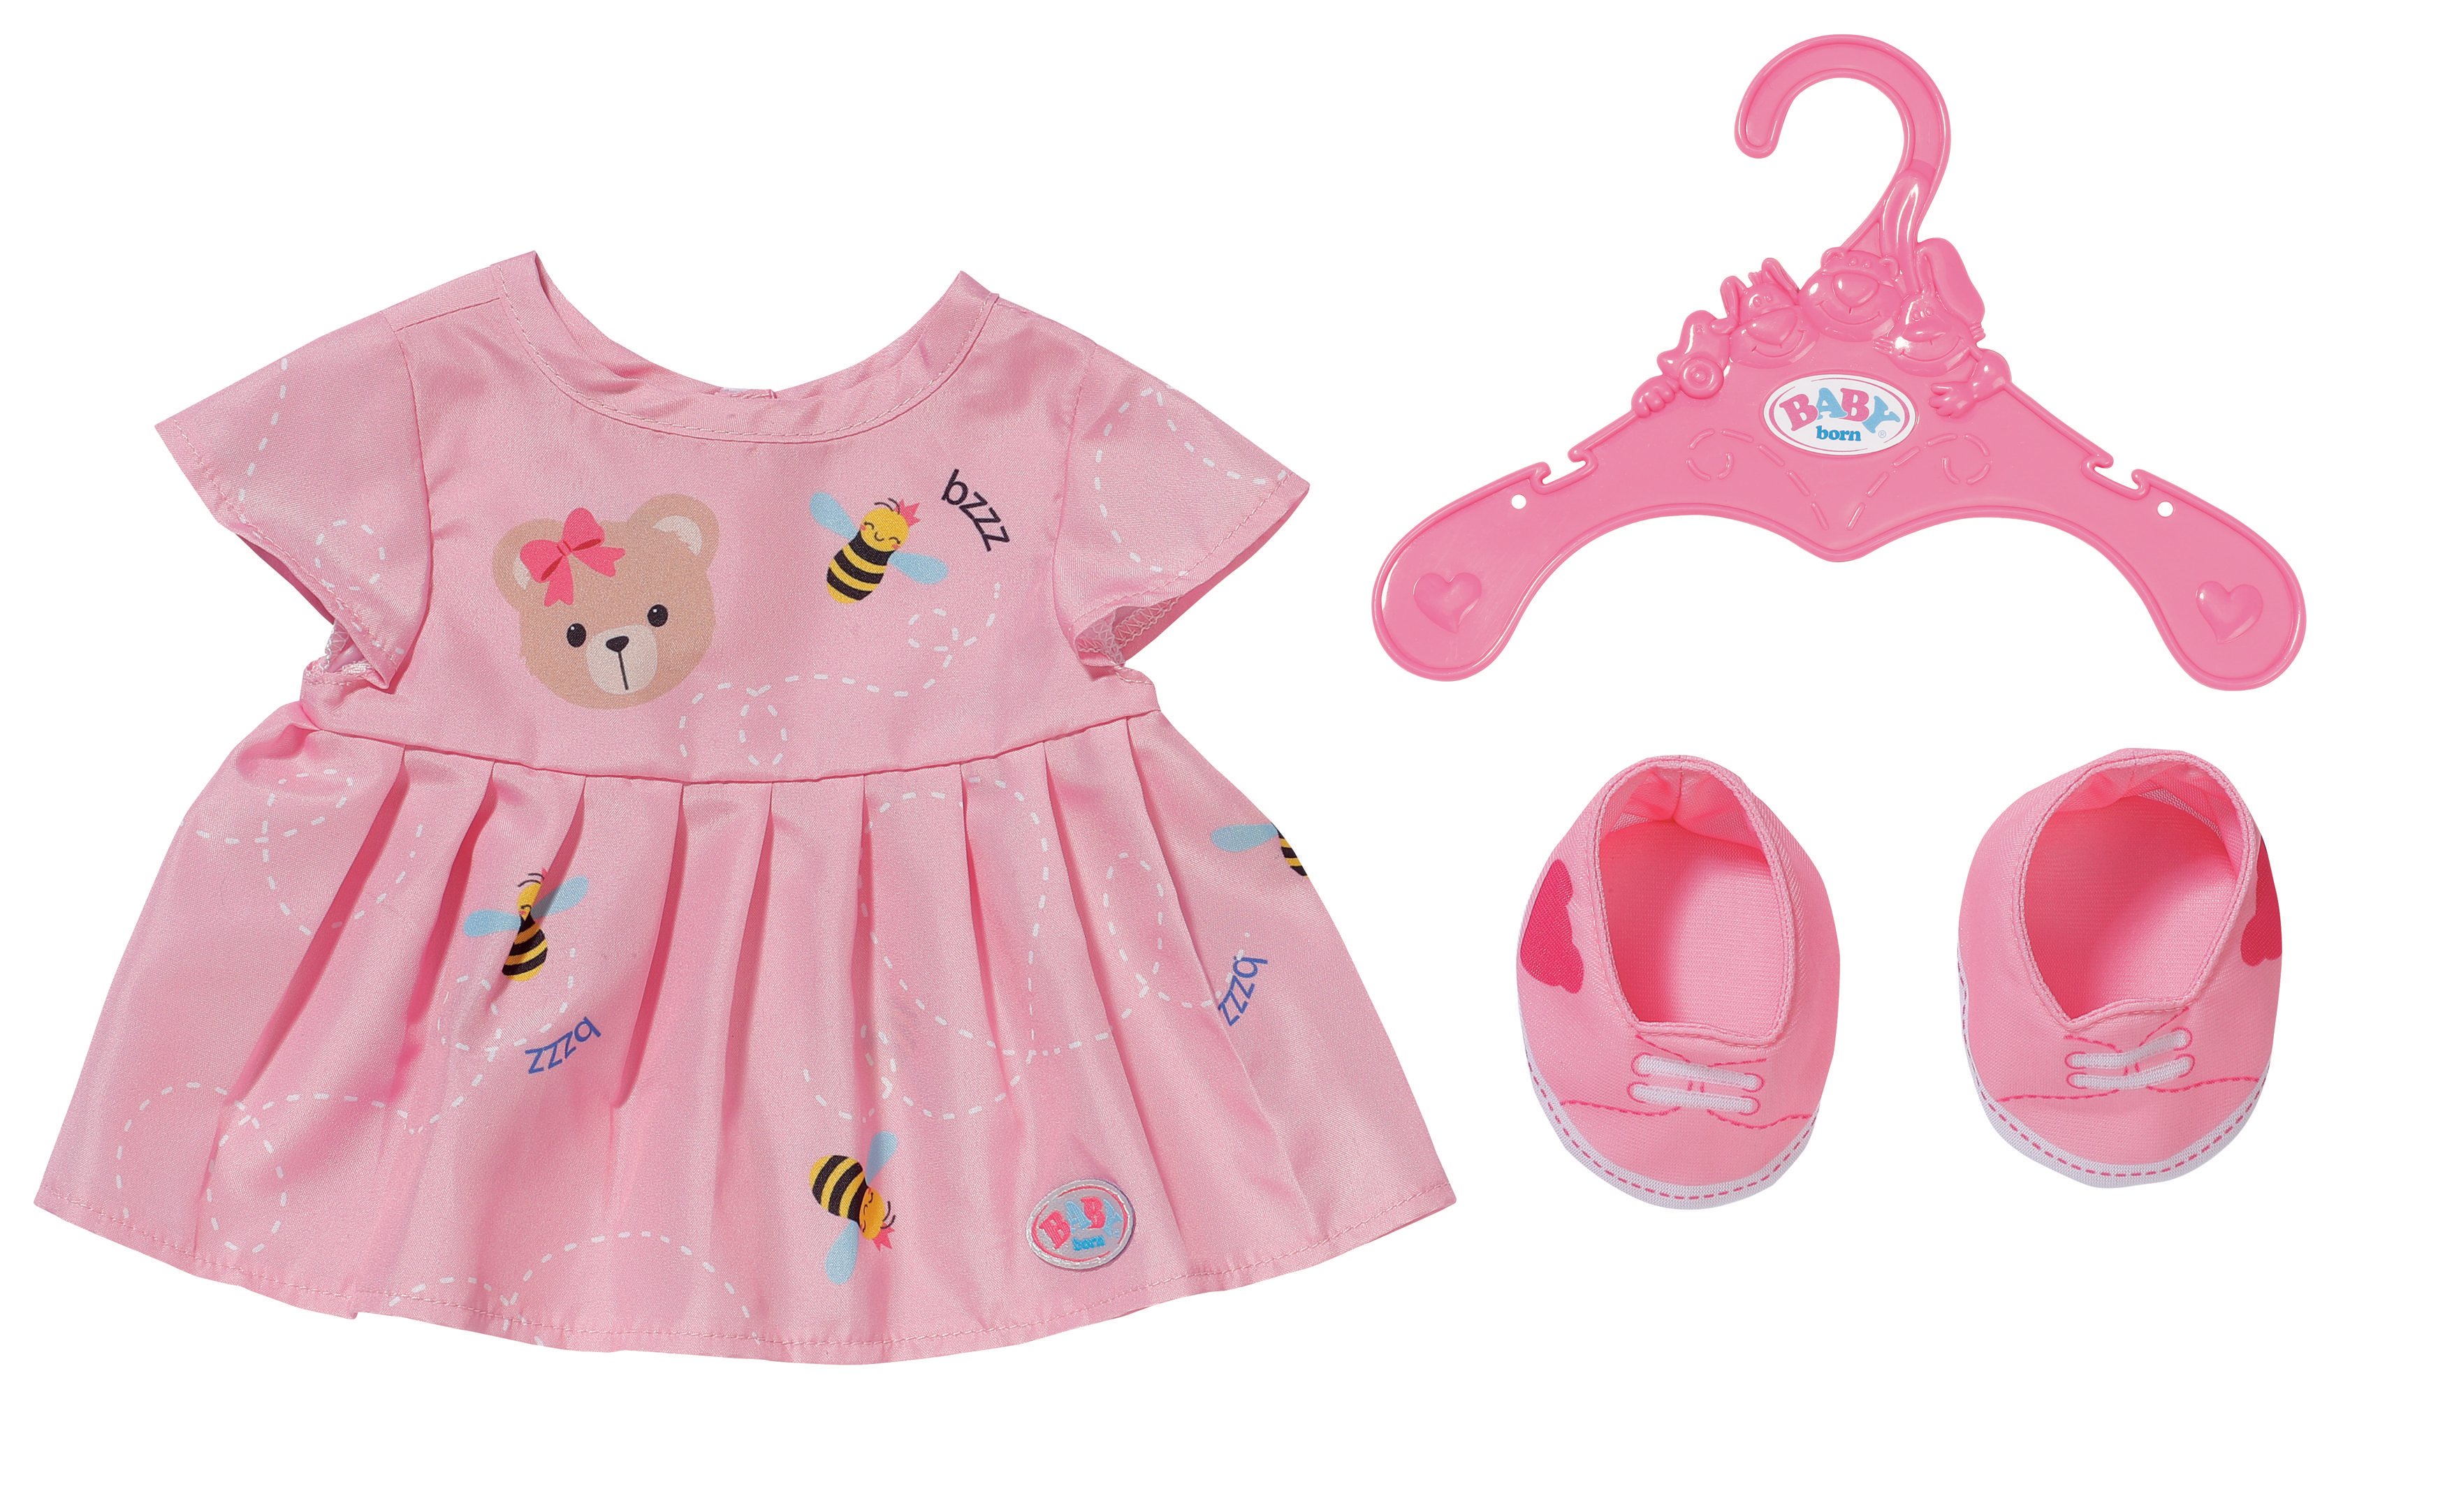 BABY born - Bear Dress Outfit (834442) - Leker